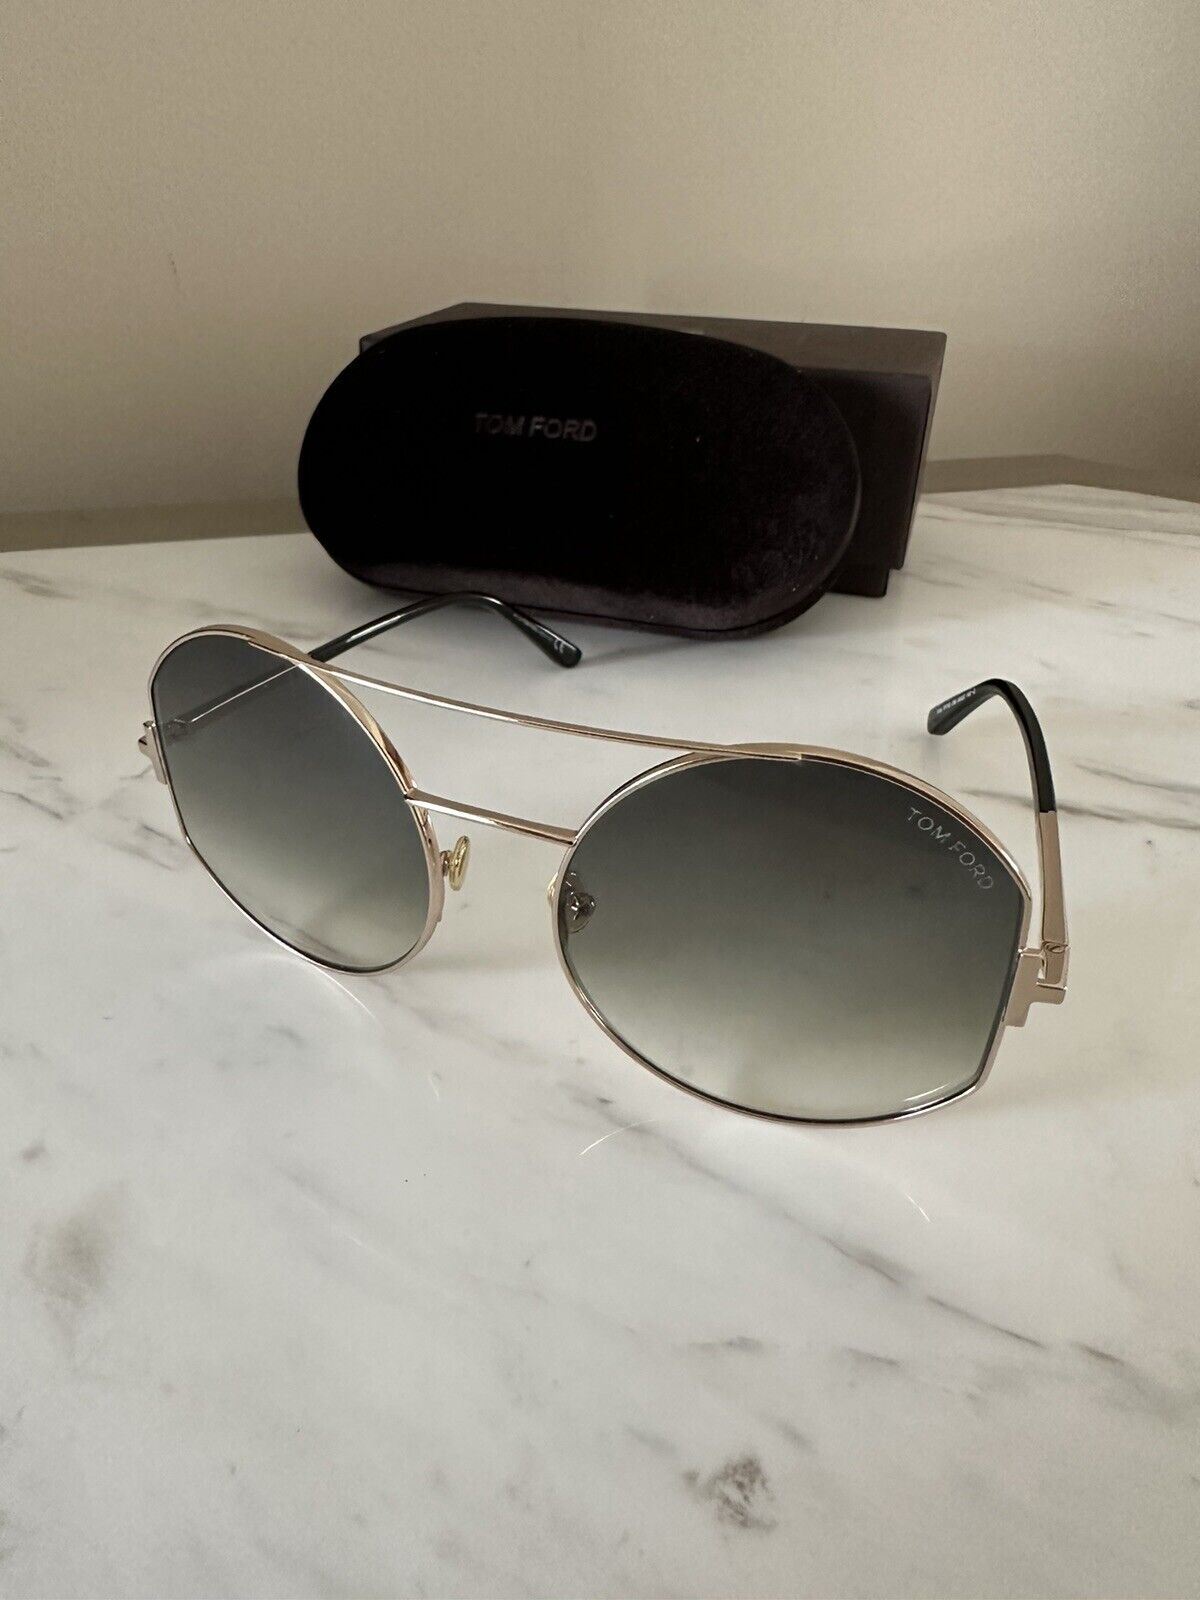 New $495 TOM FORD Women’s Sunglasses Polarized One Size TF0782 Italy